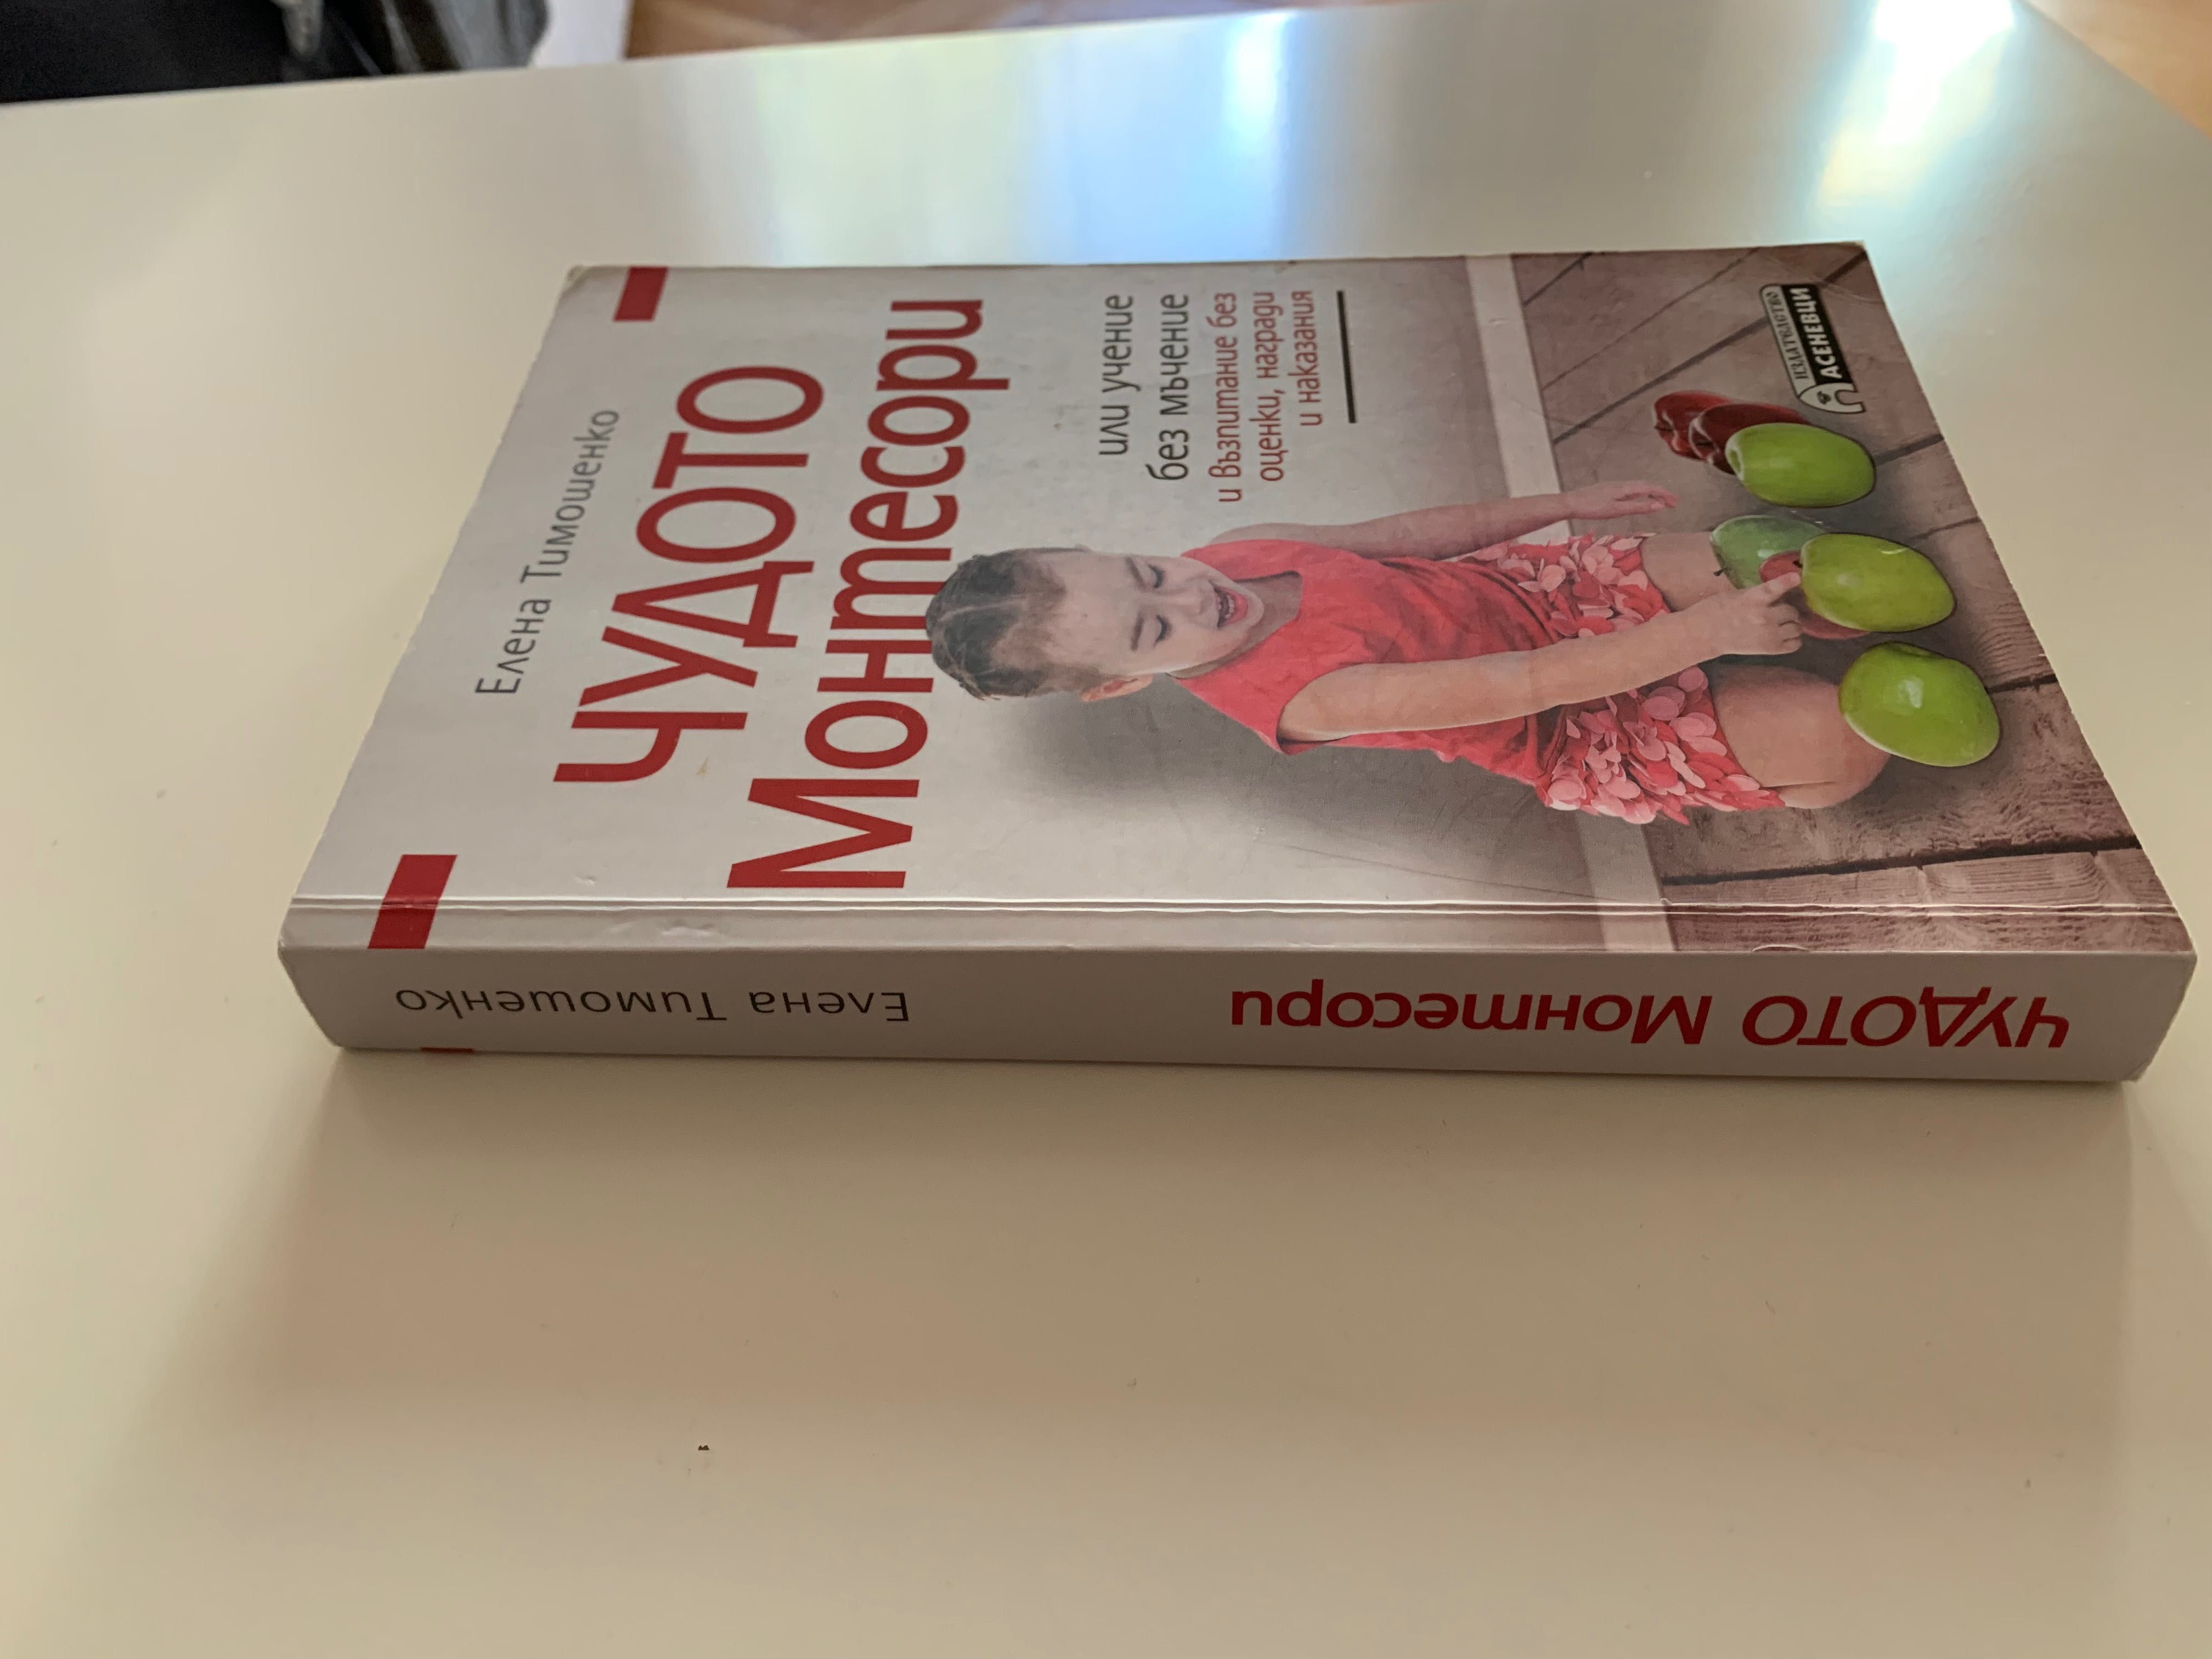 Книга “Чудото Монтесори” Елена Тимошенко